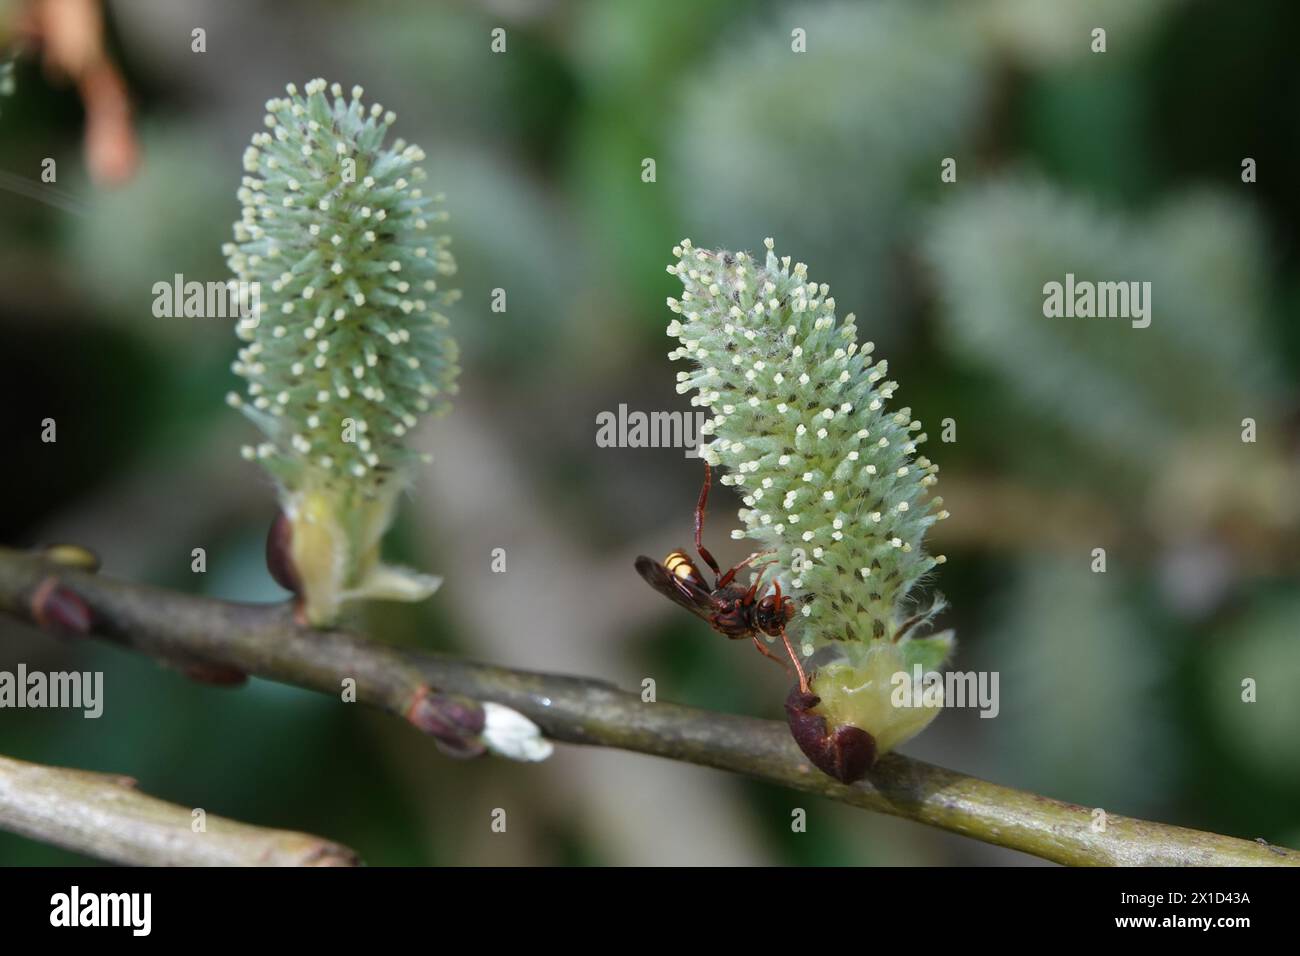 Spring UK, Wasp Drinking Nectar From Catkin Stock Photo